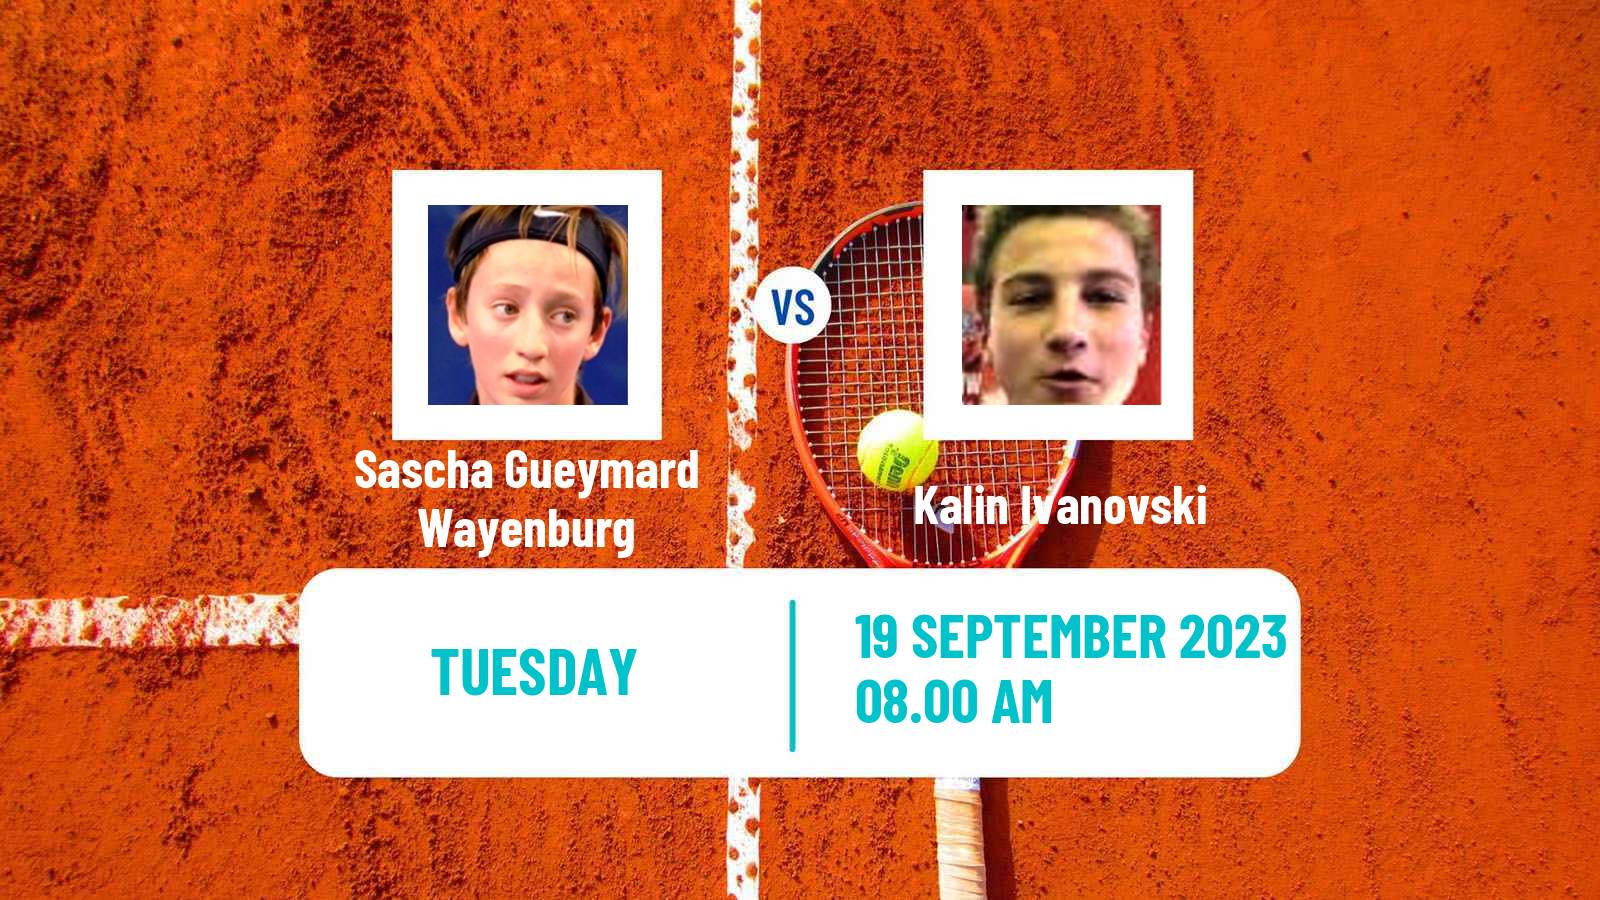 Tennis ITF M25 Setubal Men Sascha Gueymard Wayenburg - Kalin Ivanovski